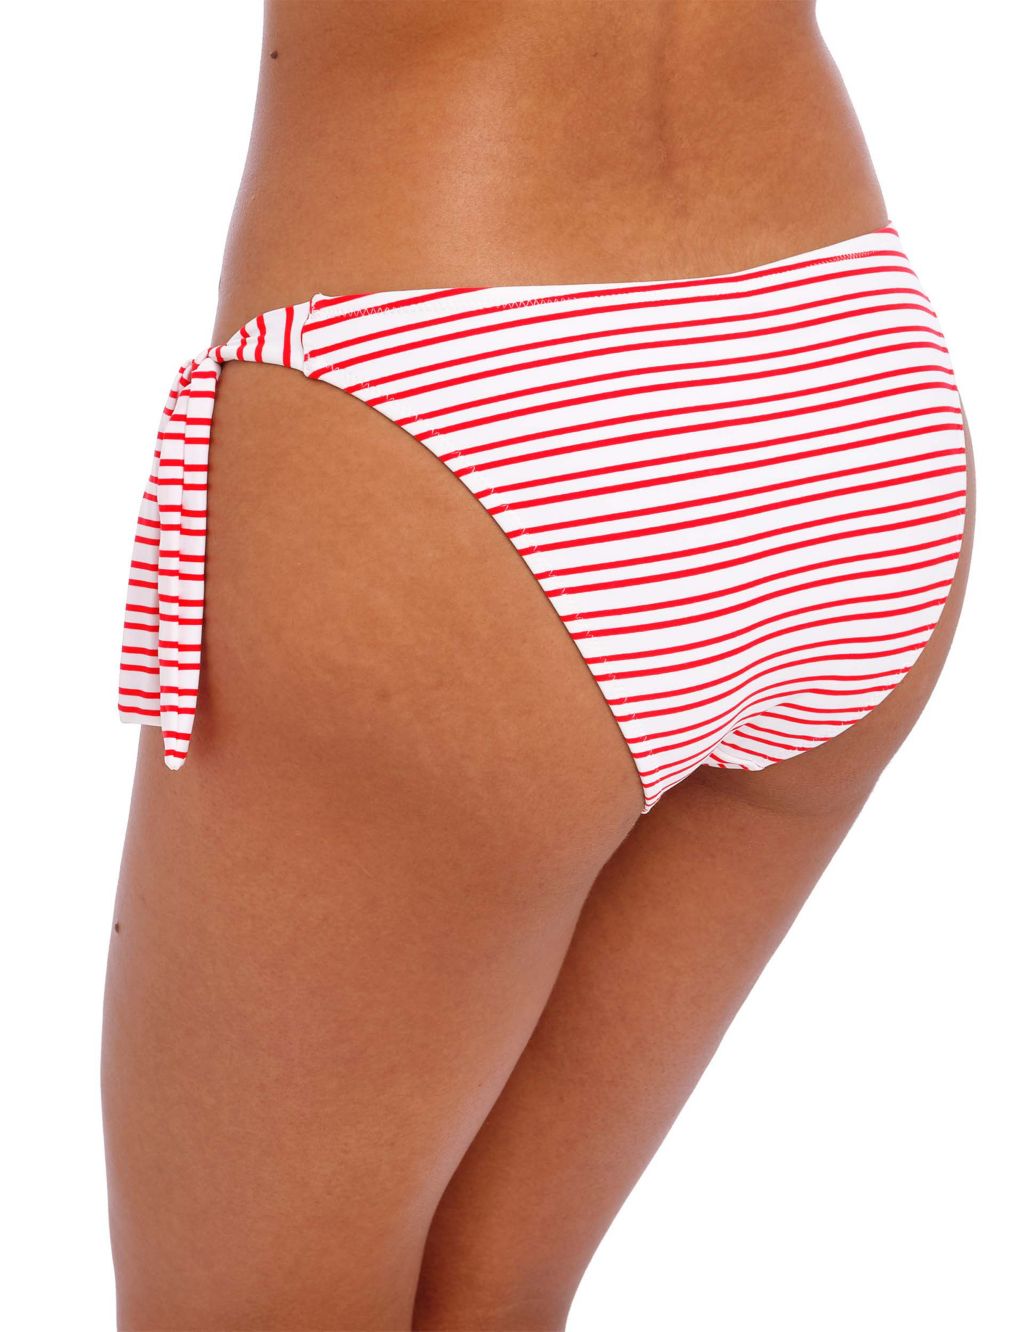 New Shores Striped Hipster Bikini Bottoms image 4